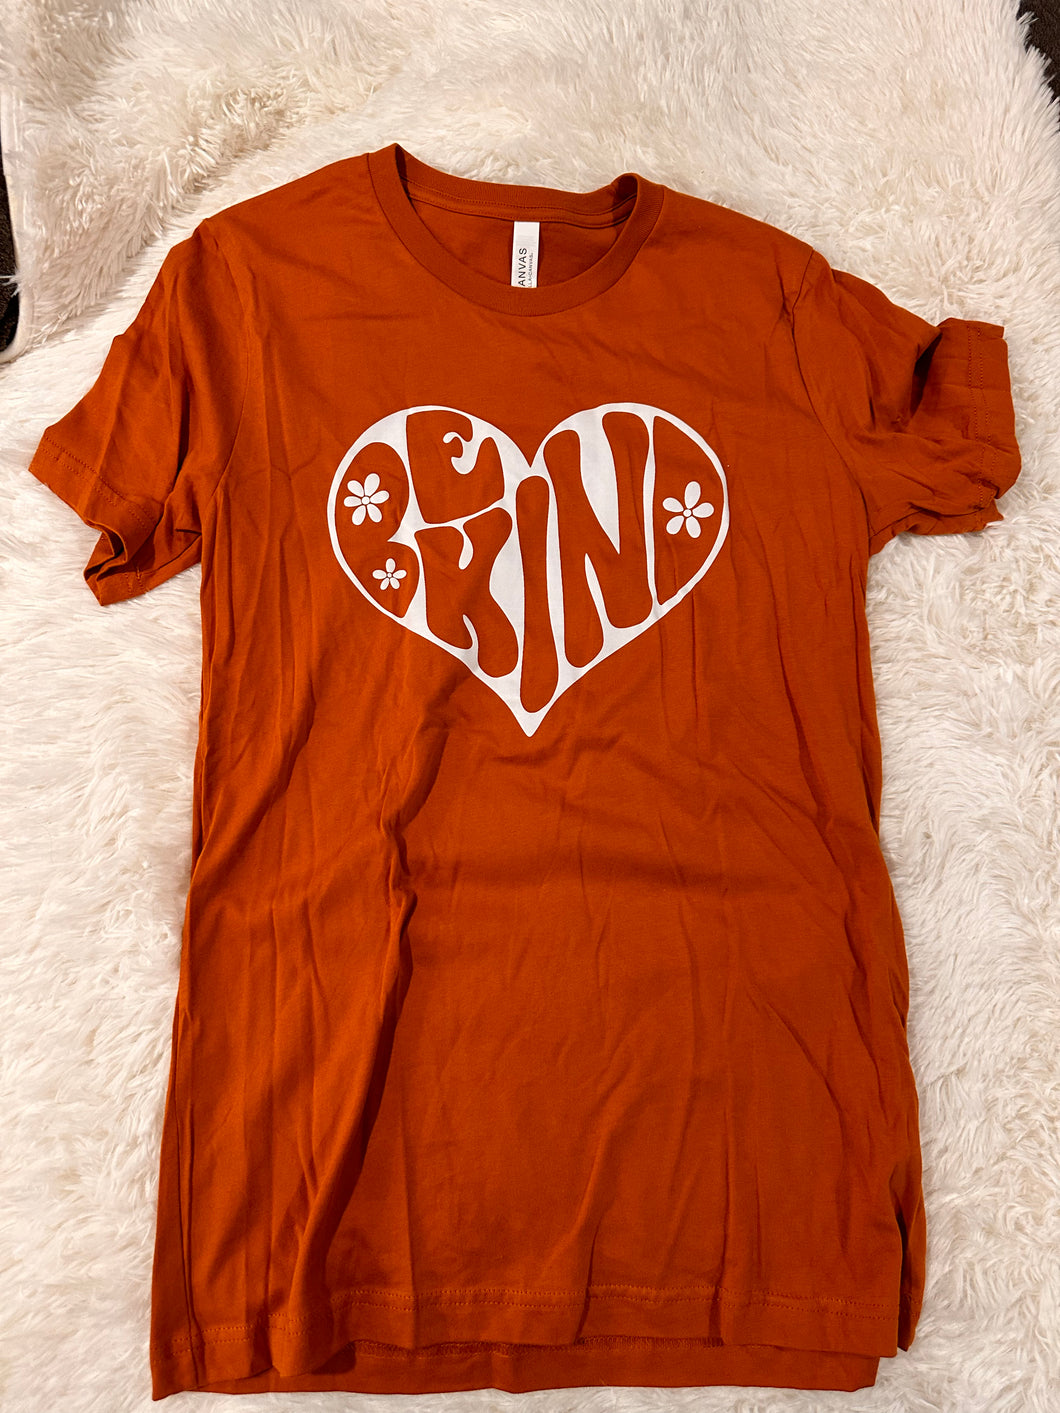 Be Kind T-Shirt Autumn - Medium